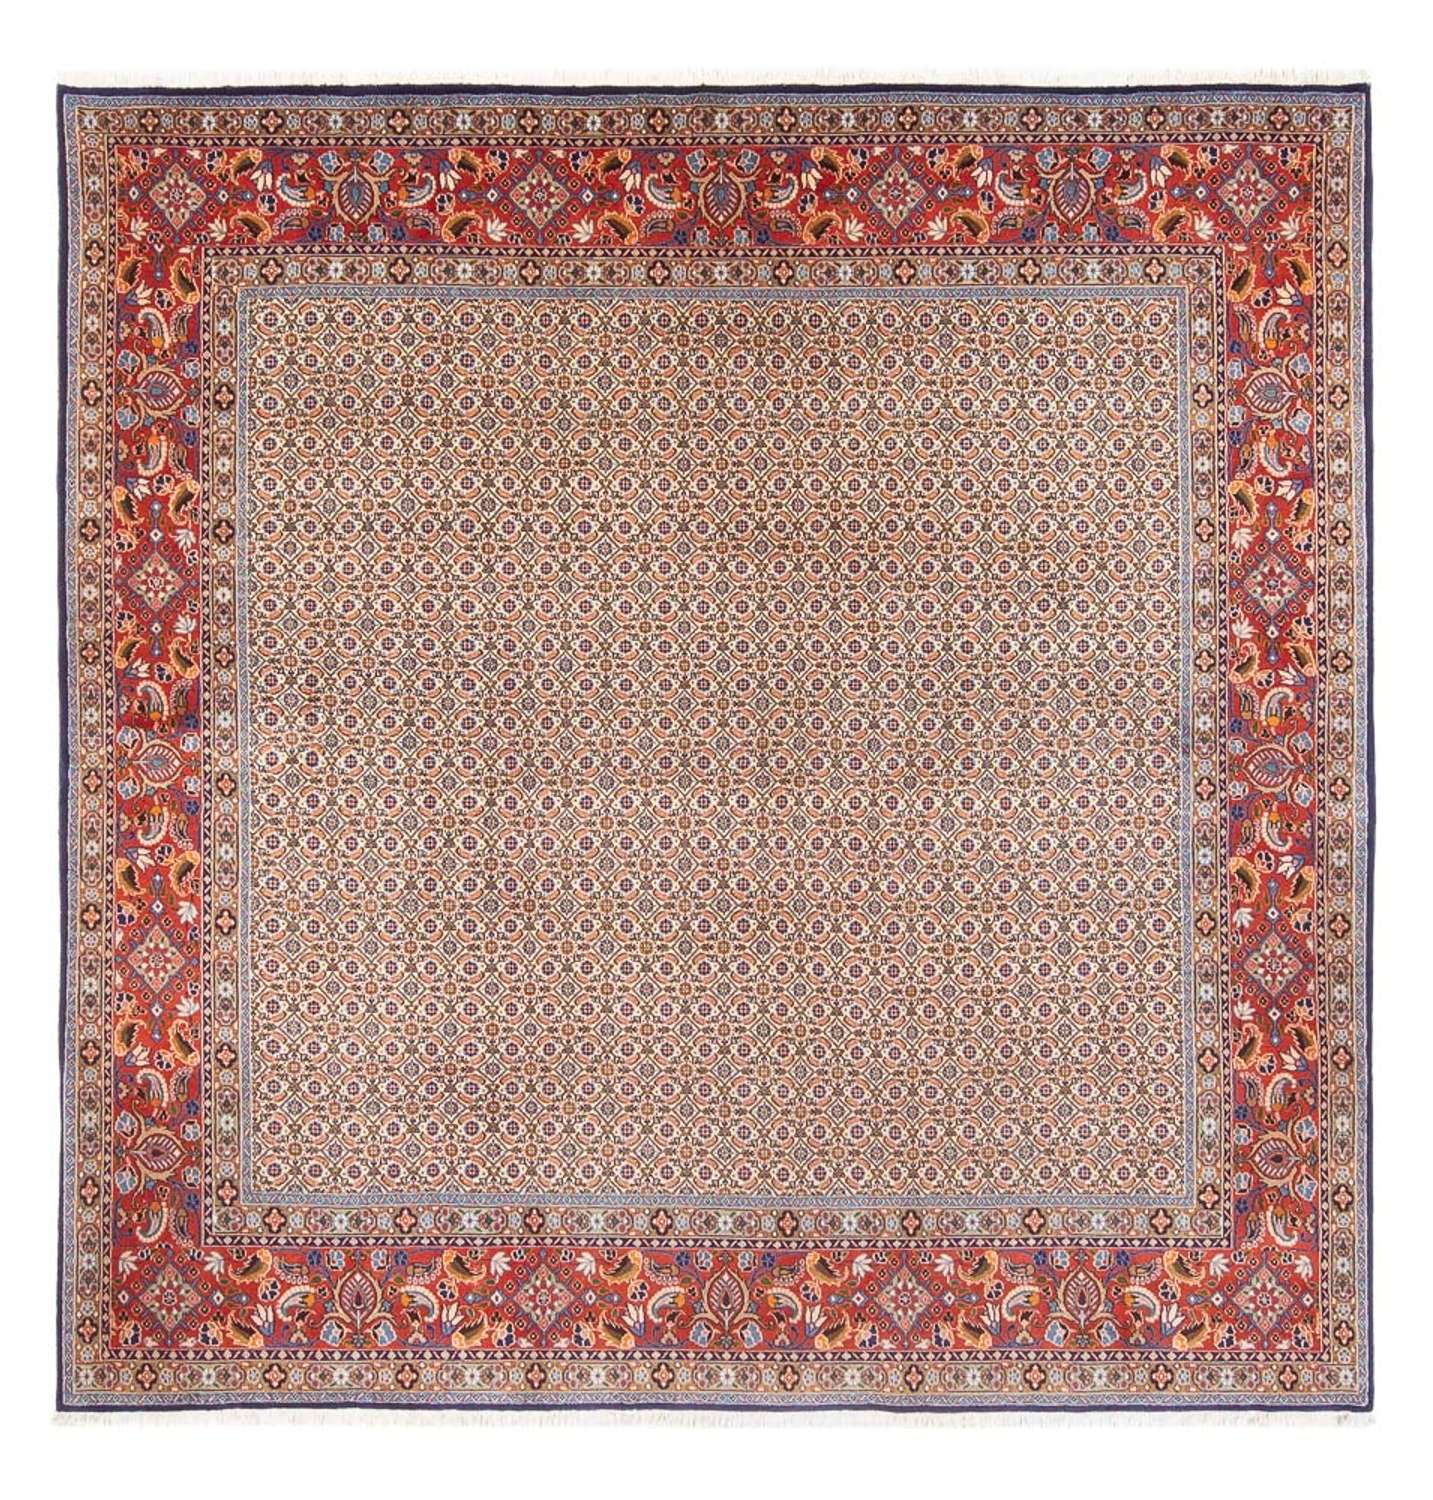 Perserteppich - Classic quadratisch  - 242 x 247 cm - dunkelbeige